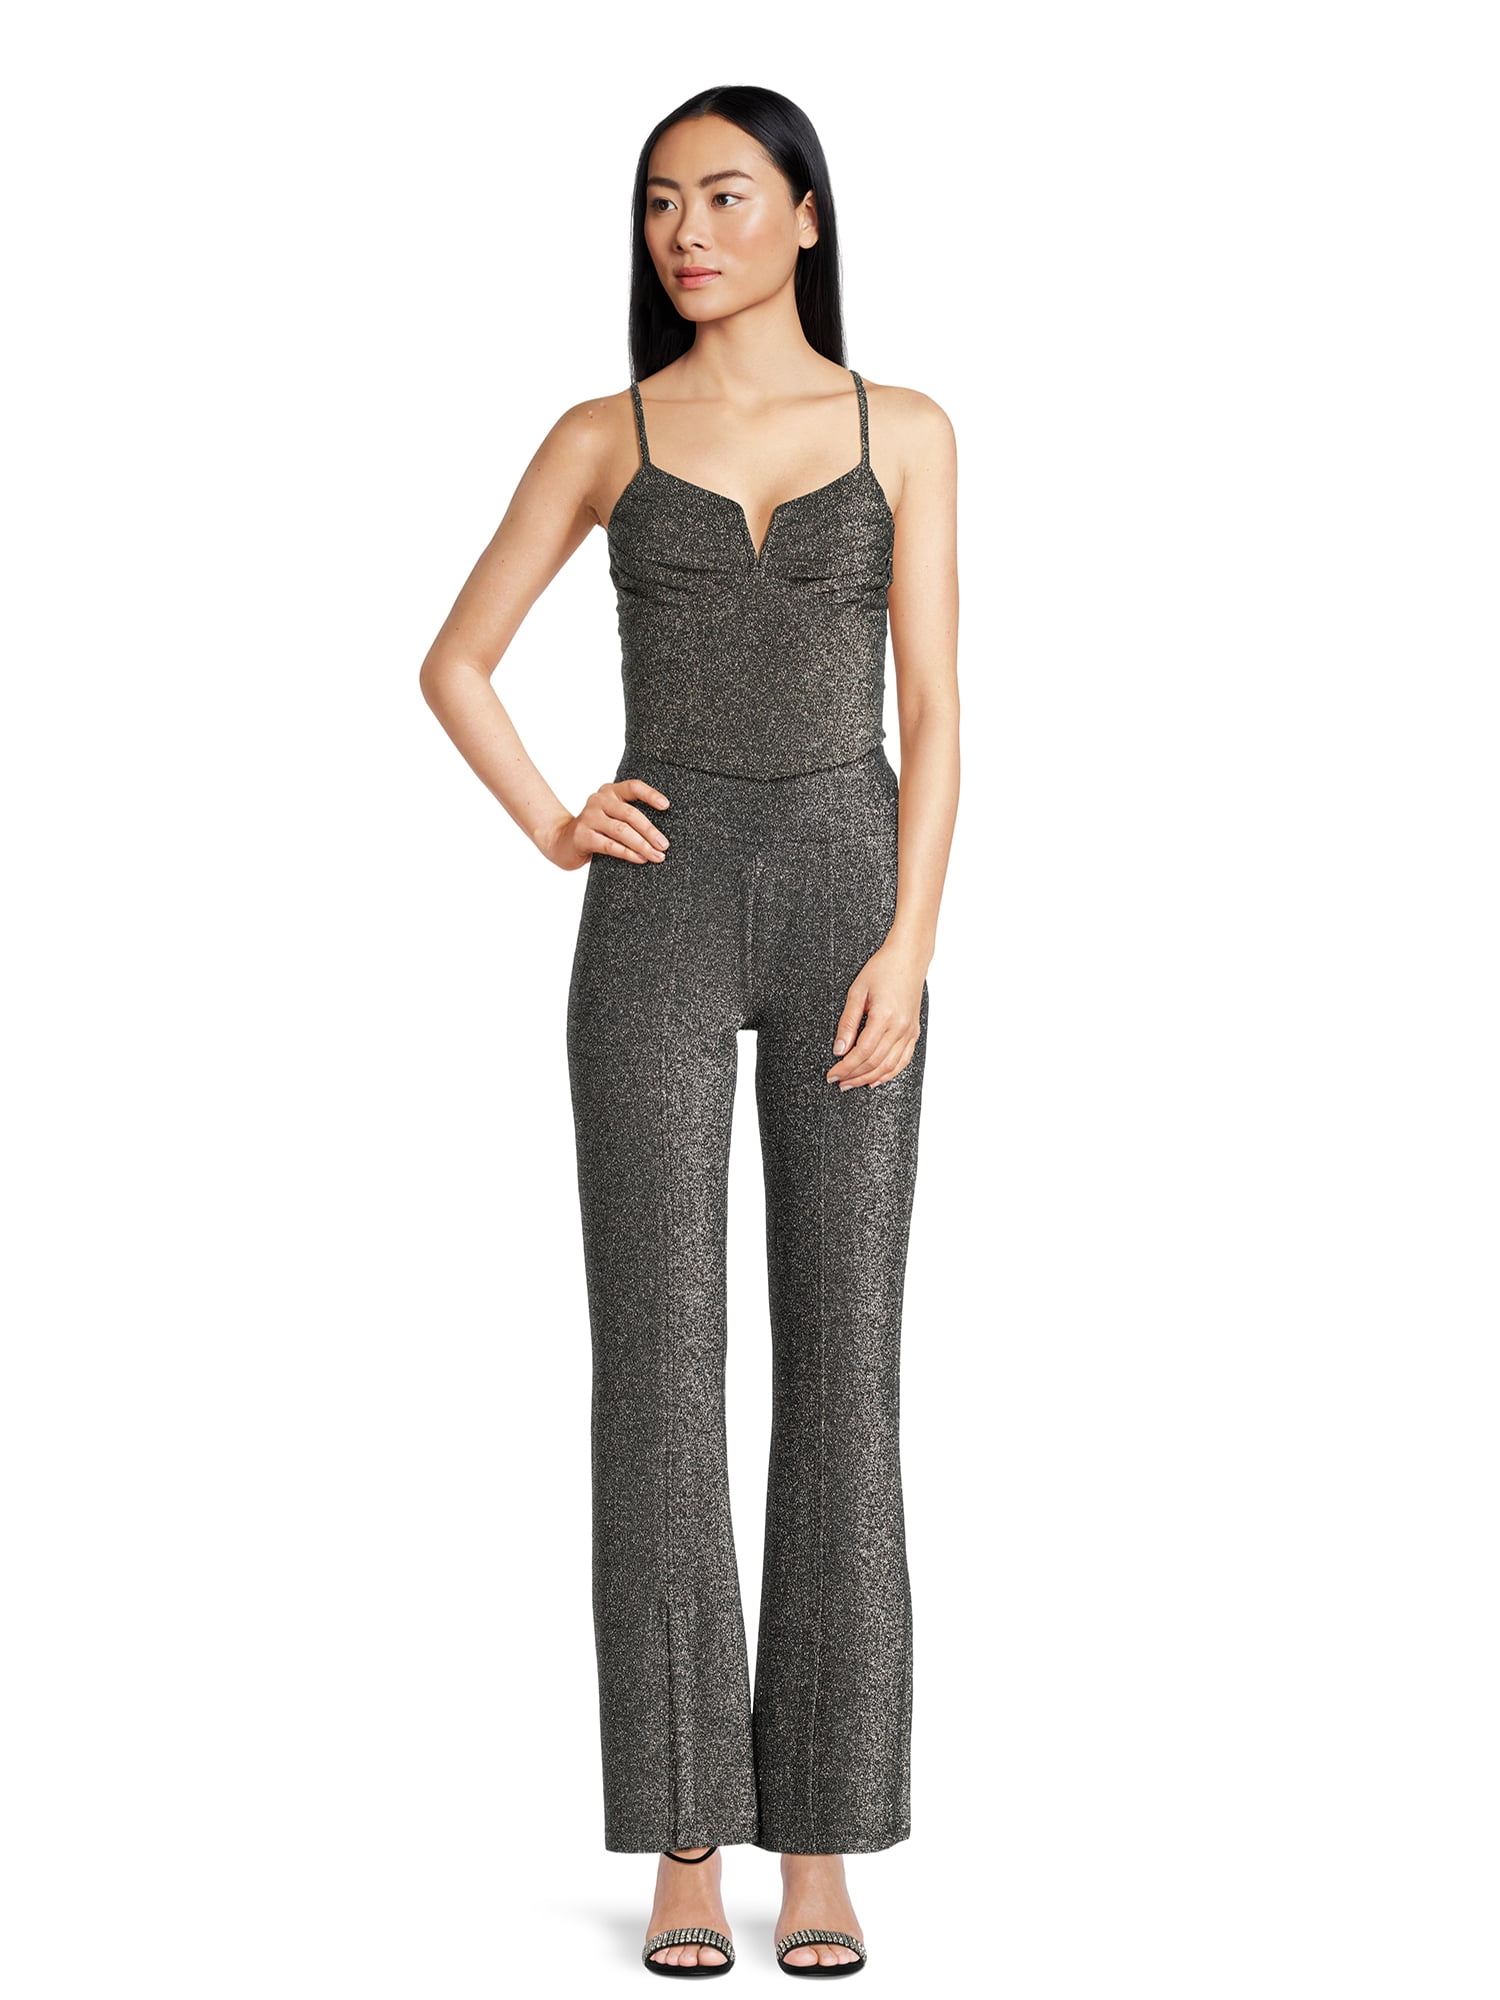 Madden NYC Women's Metallic Pants, 31” Inseam, Sizes XS-XXXL 